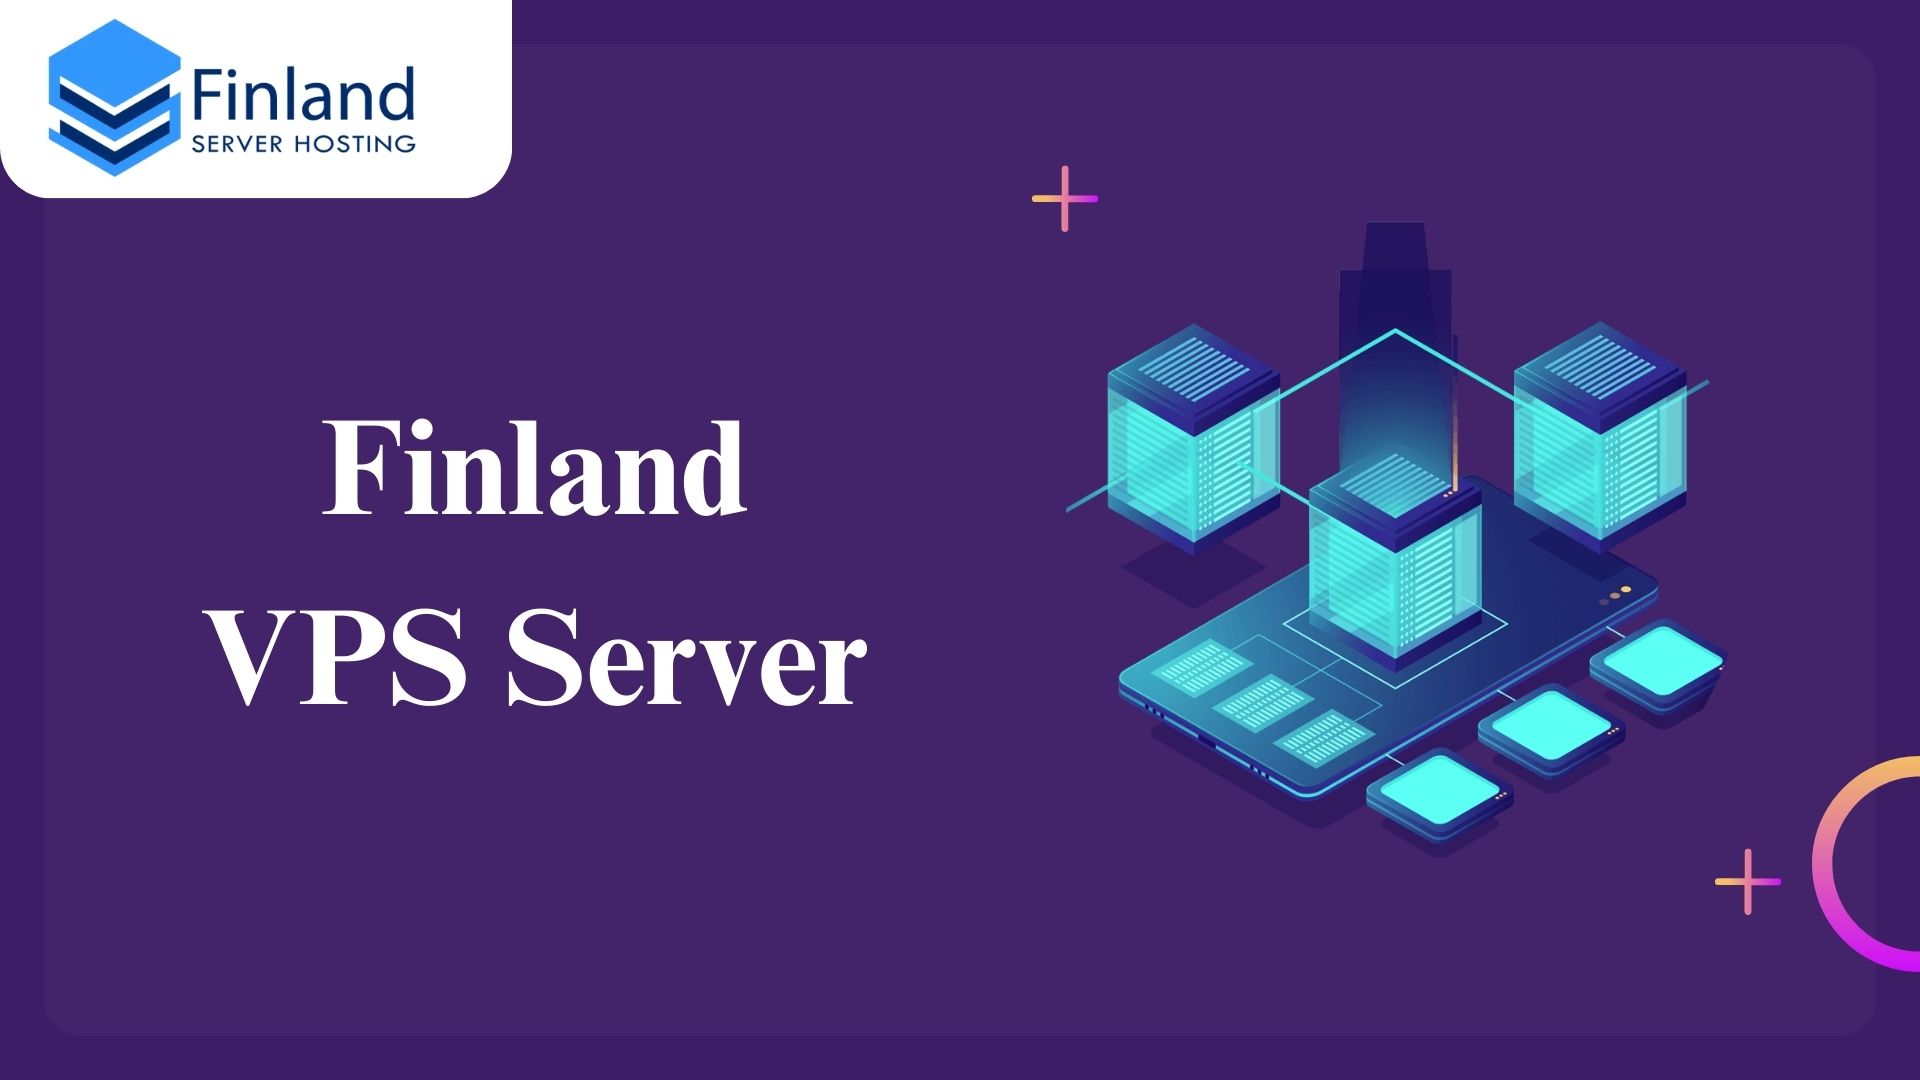 Finland-VPS-Server